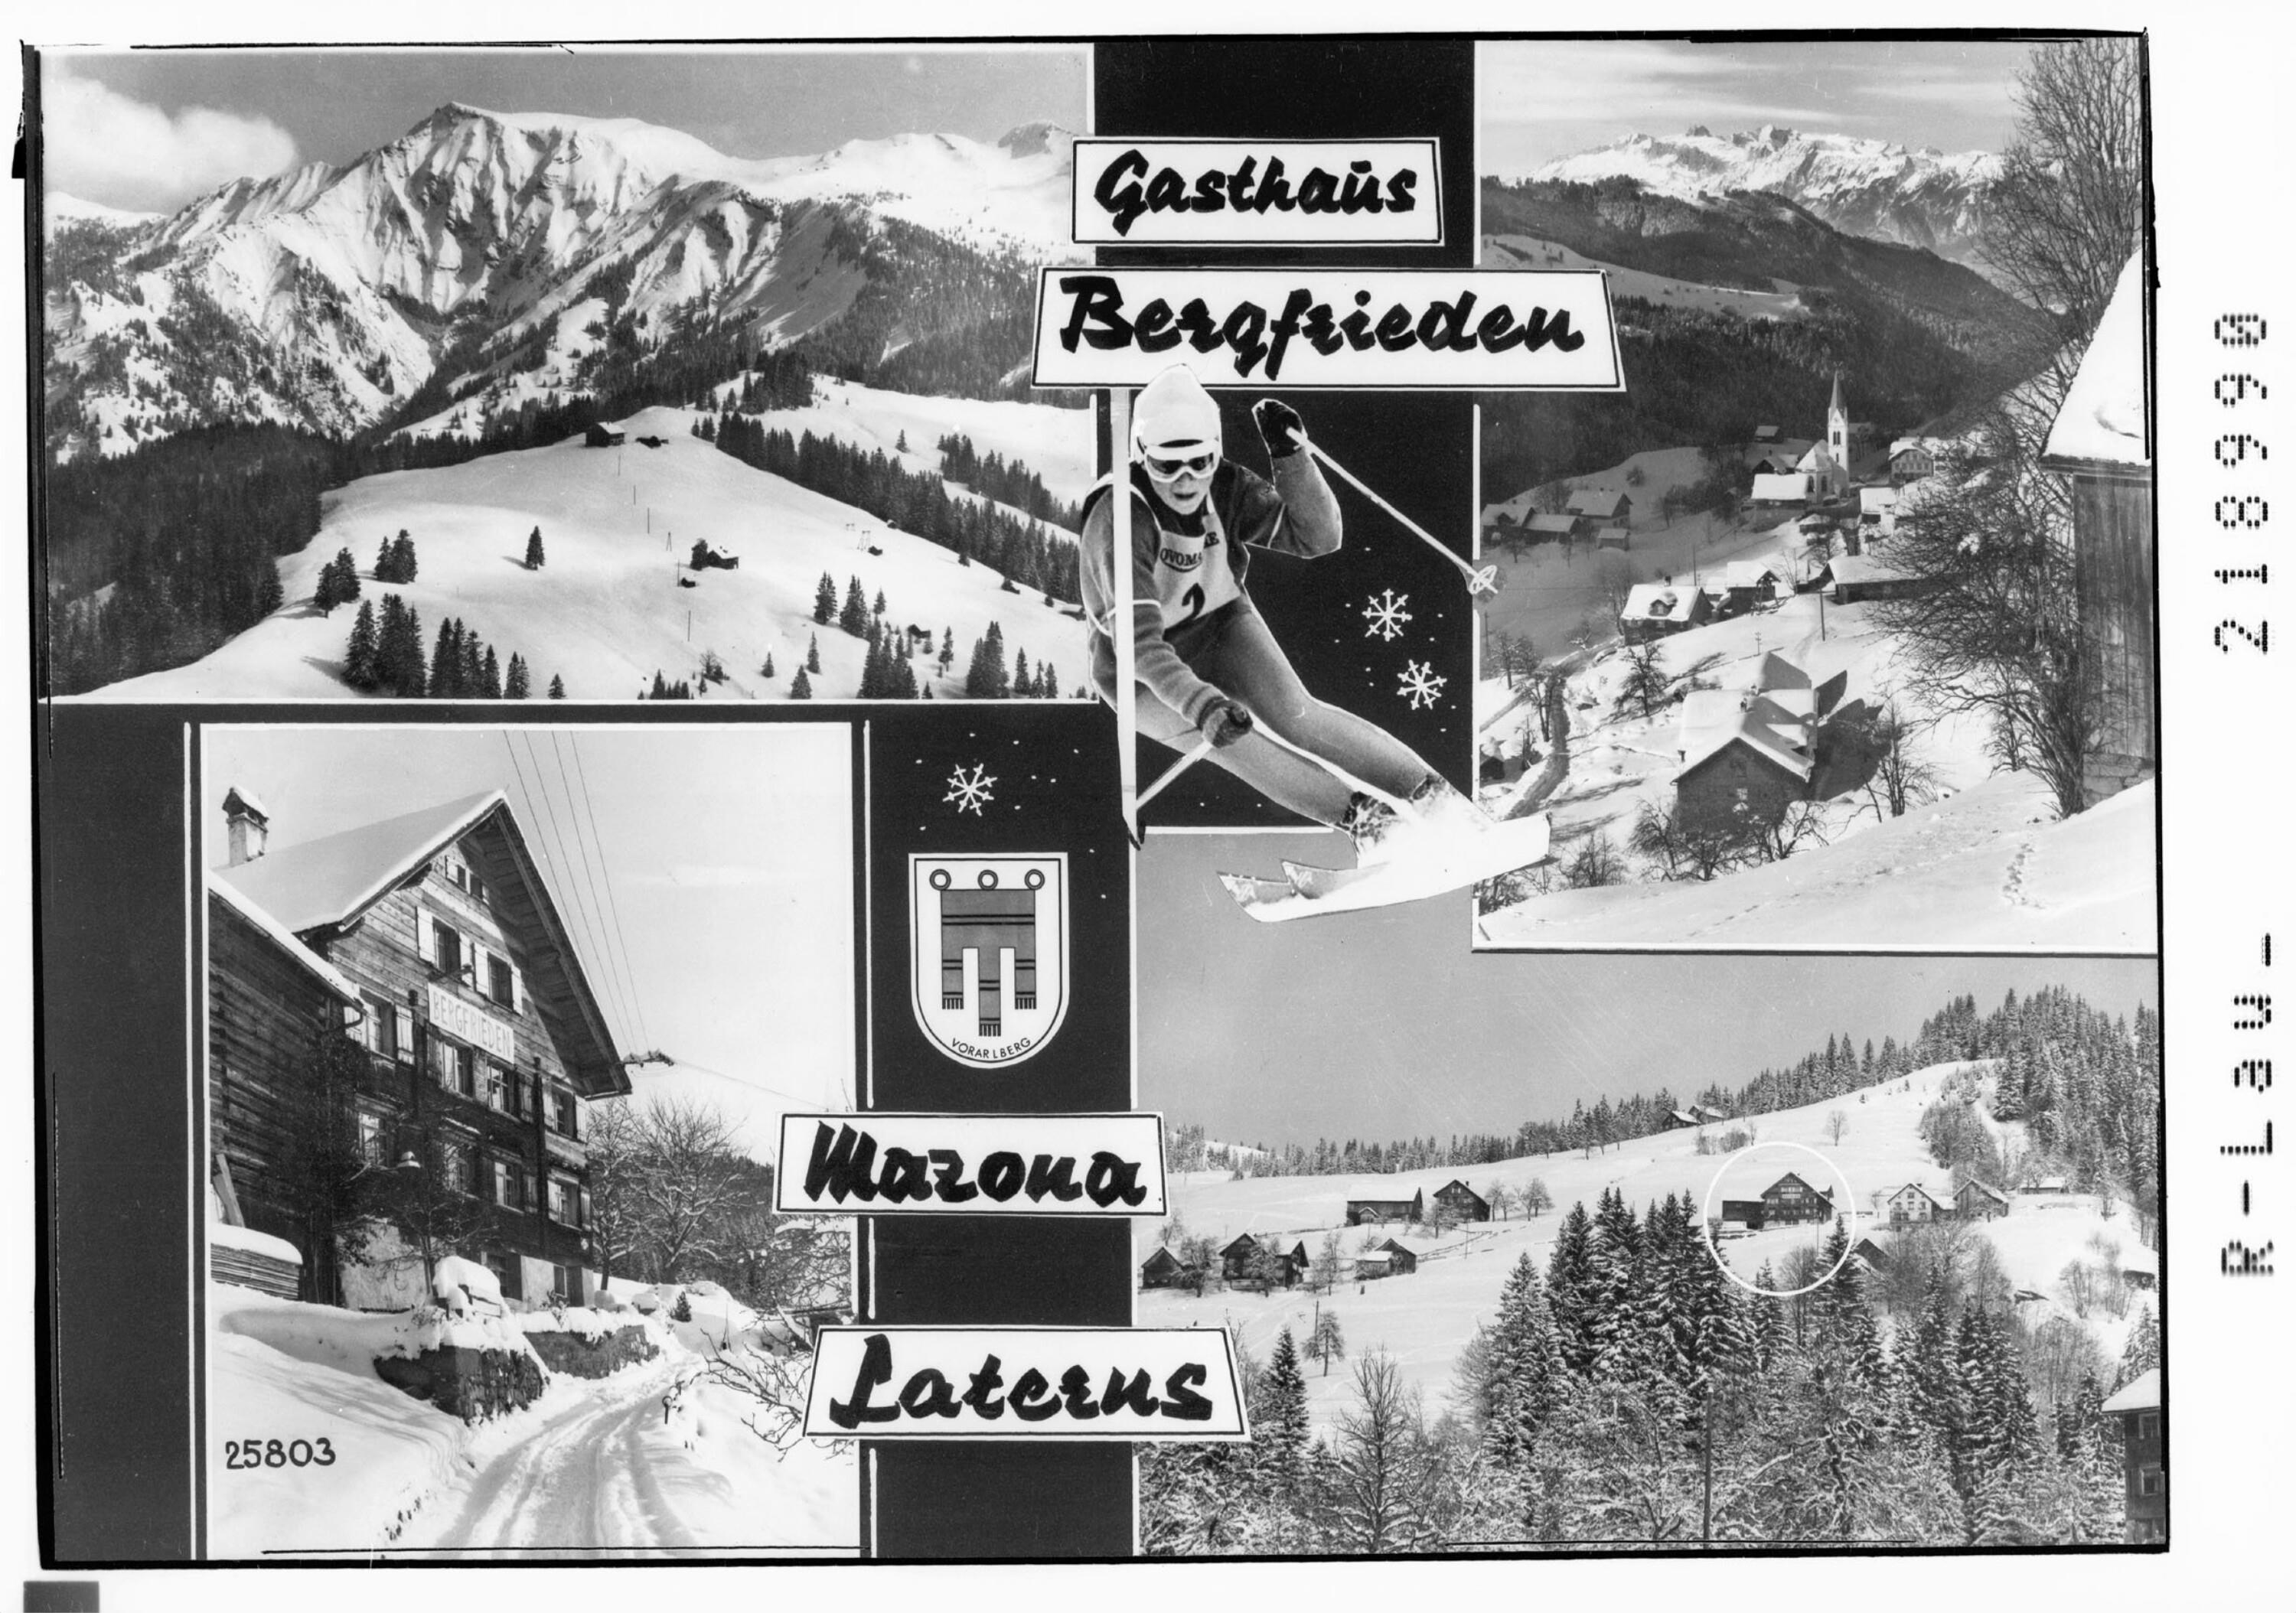 Gasthaus Bergfrieden Mazona Laterns></div>


    <hr>
    <div class=